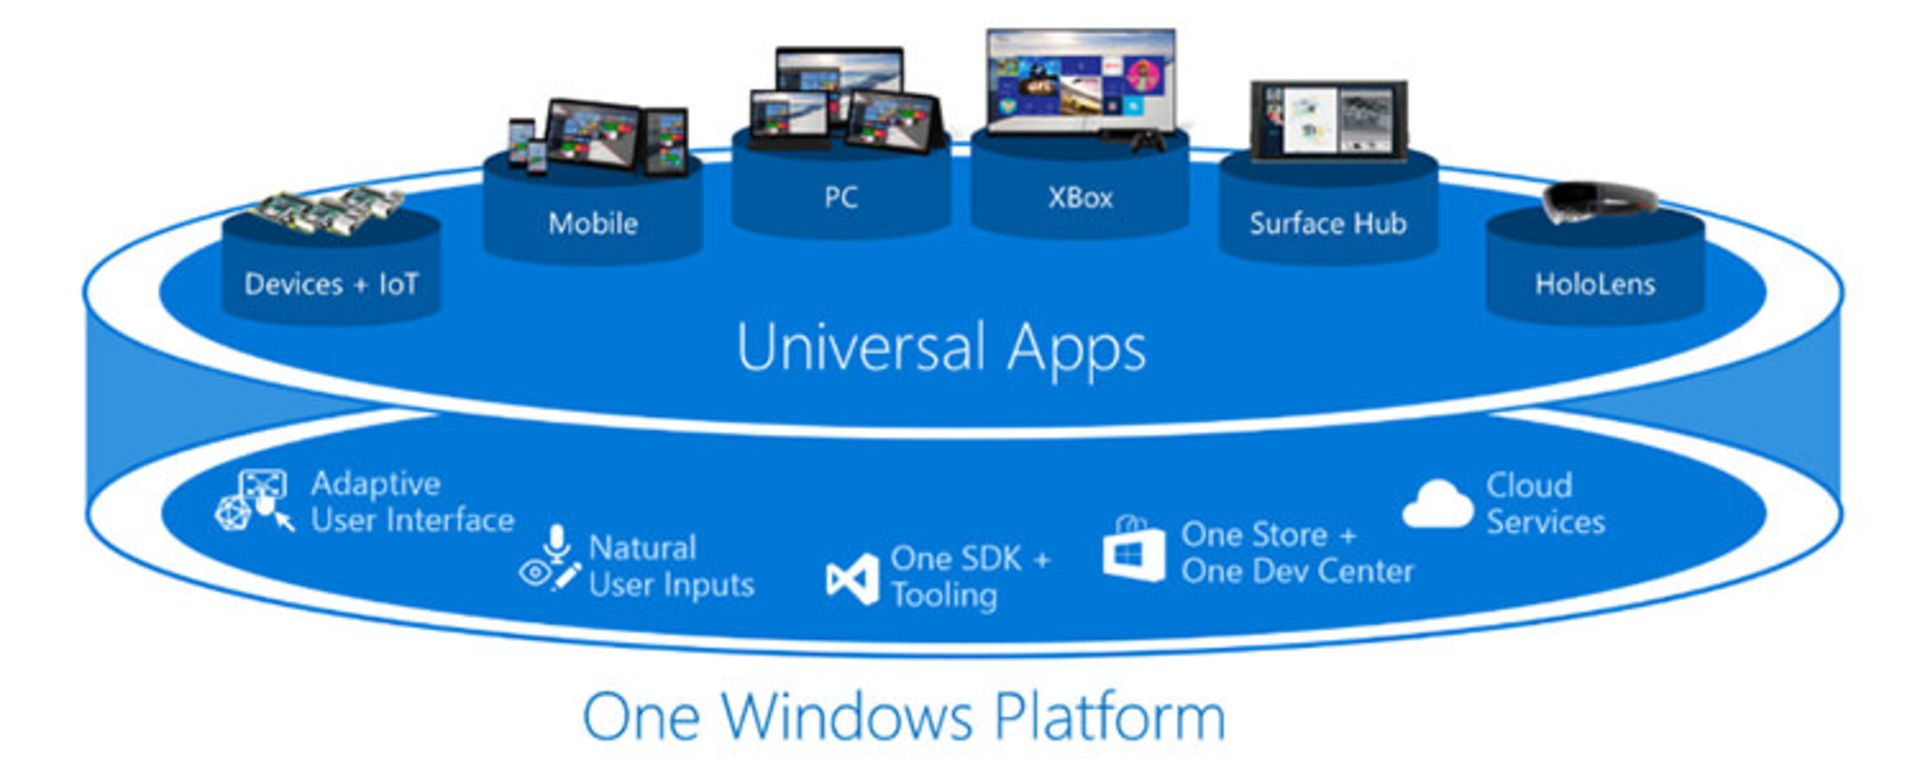 One Windows Platform